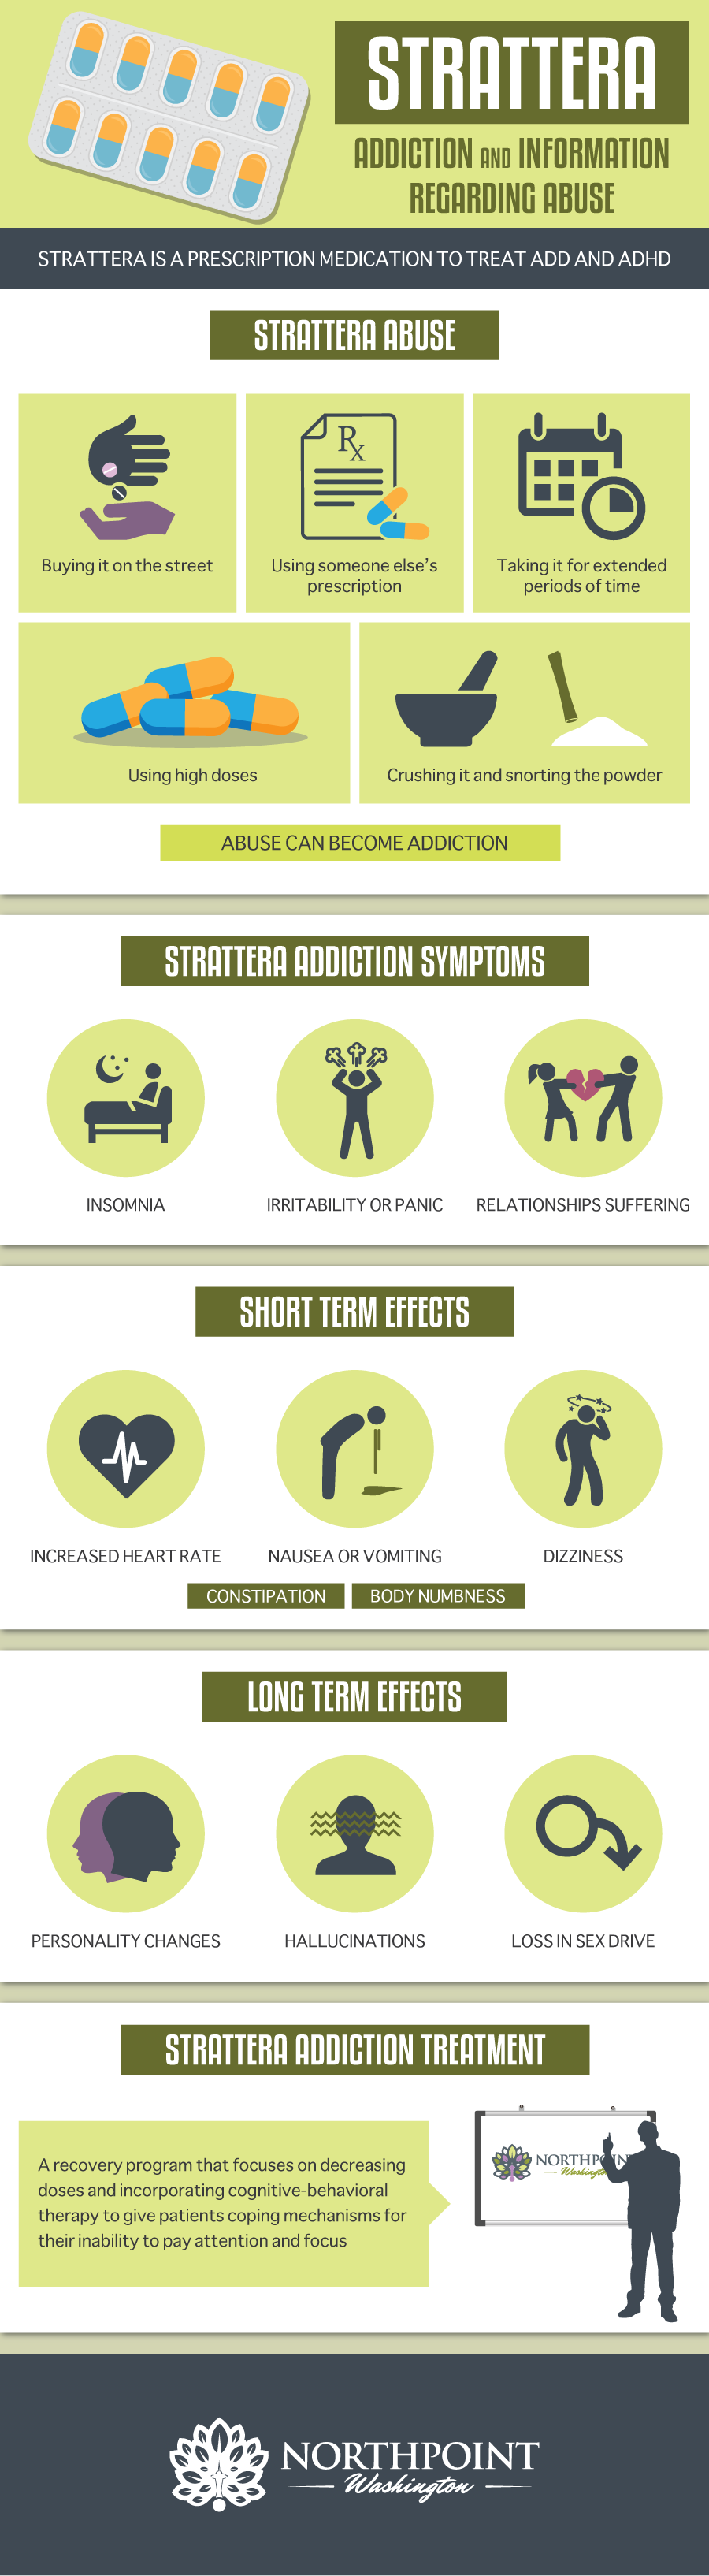 Strattera Addiction Infographic